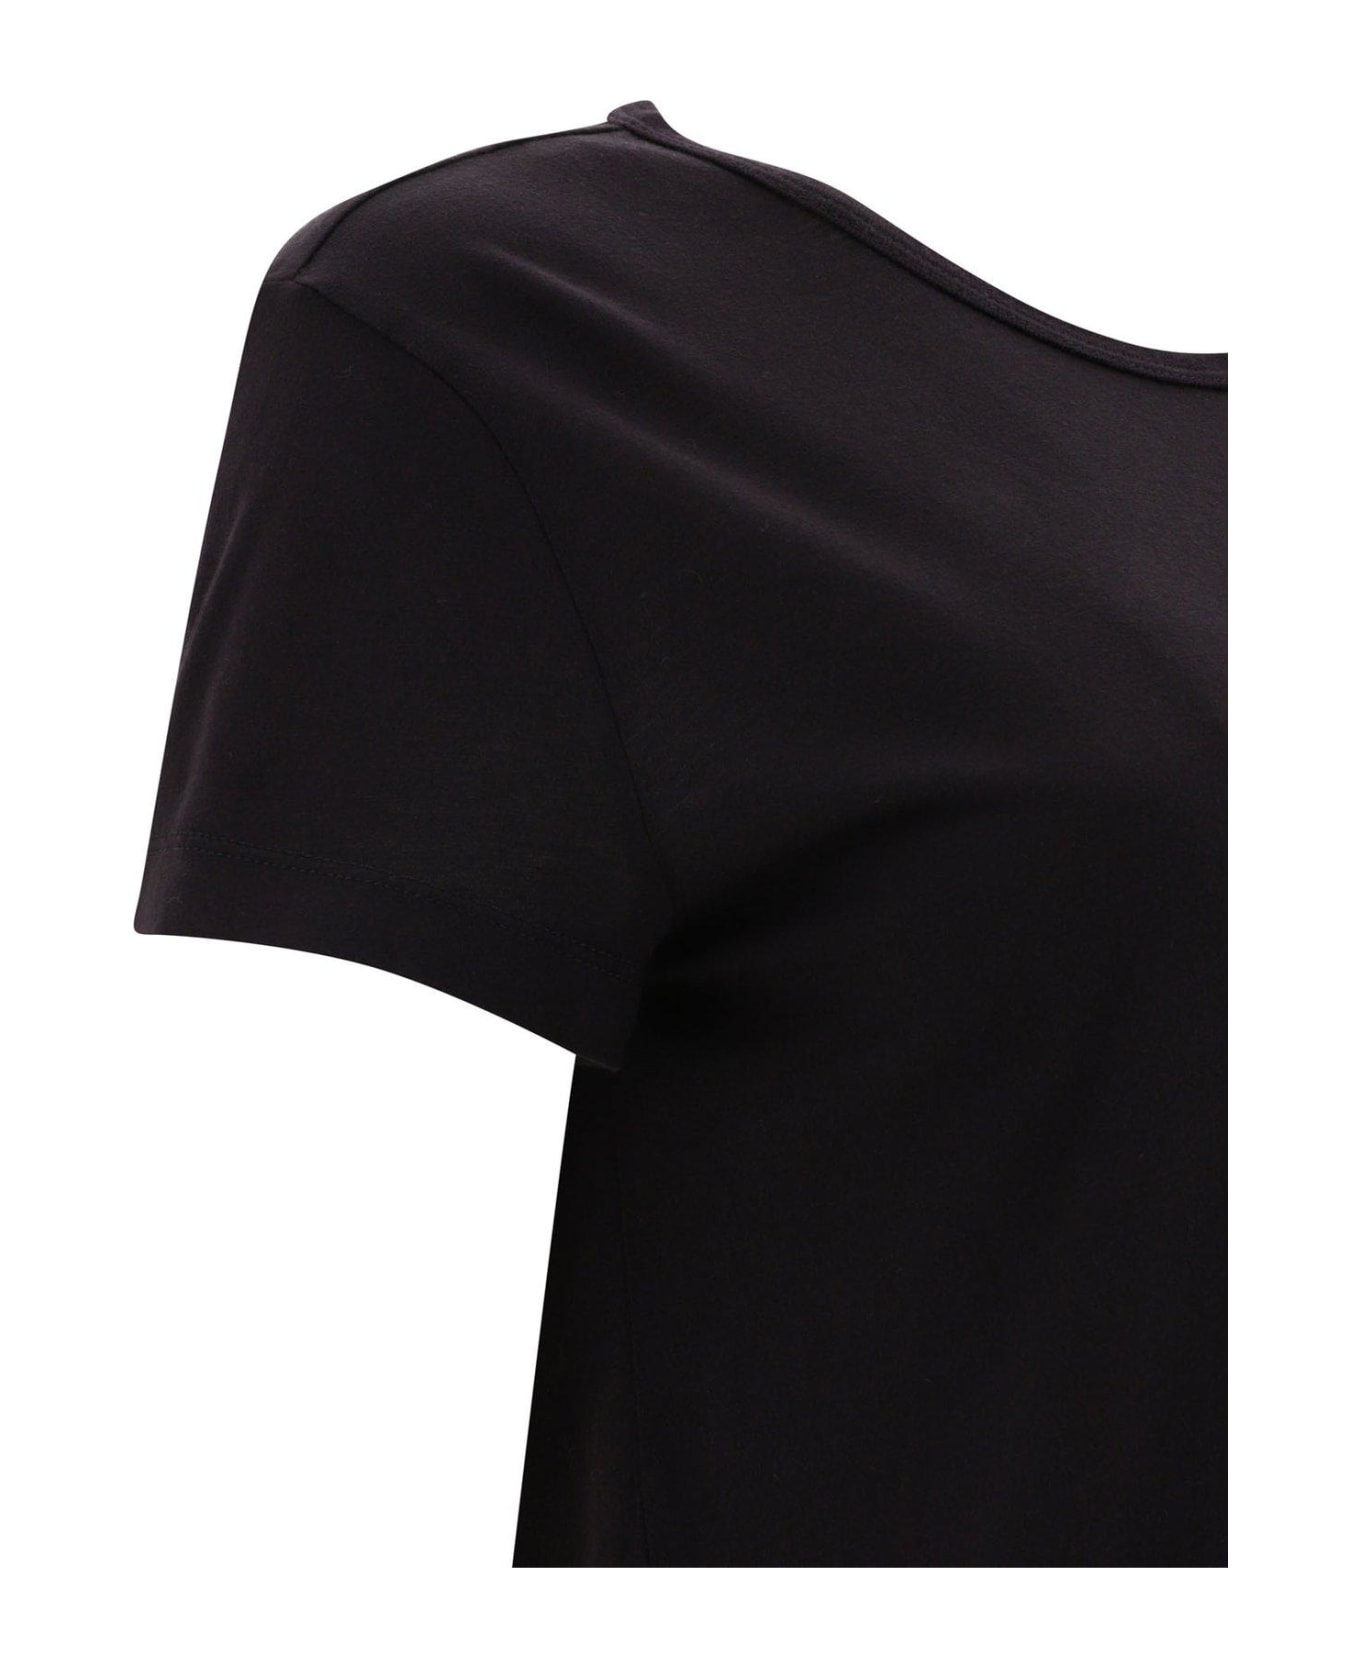 AGOLDE Drew Short Sleeved T-shirt - Blk Black